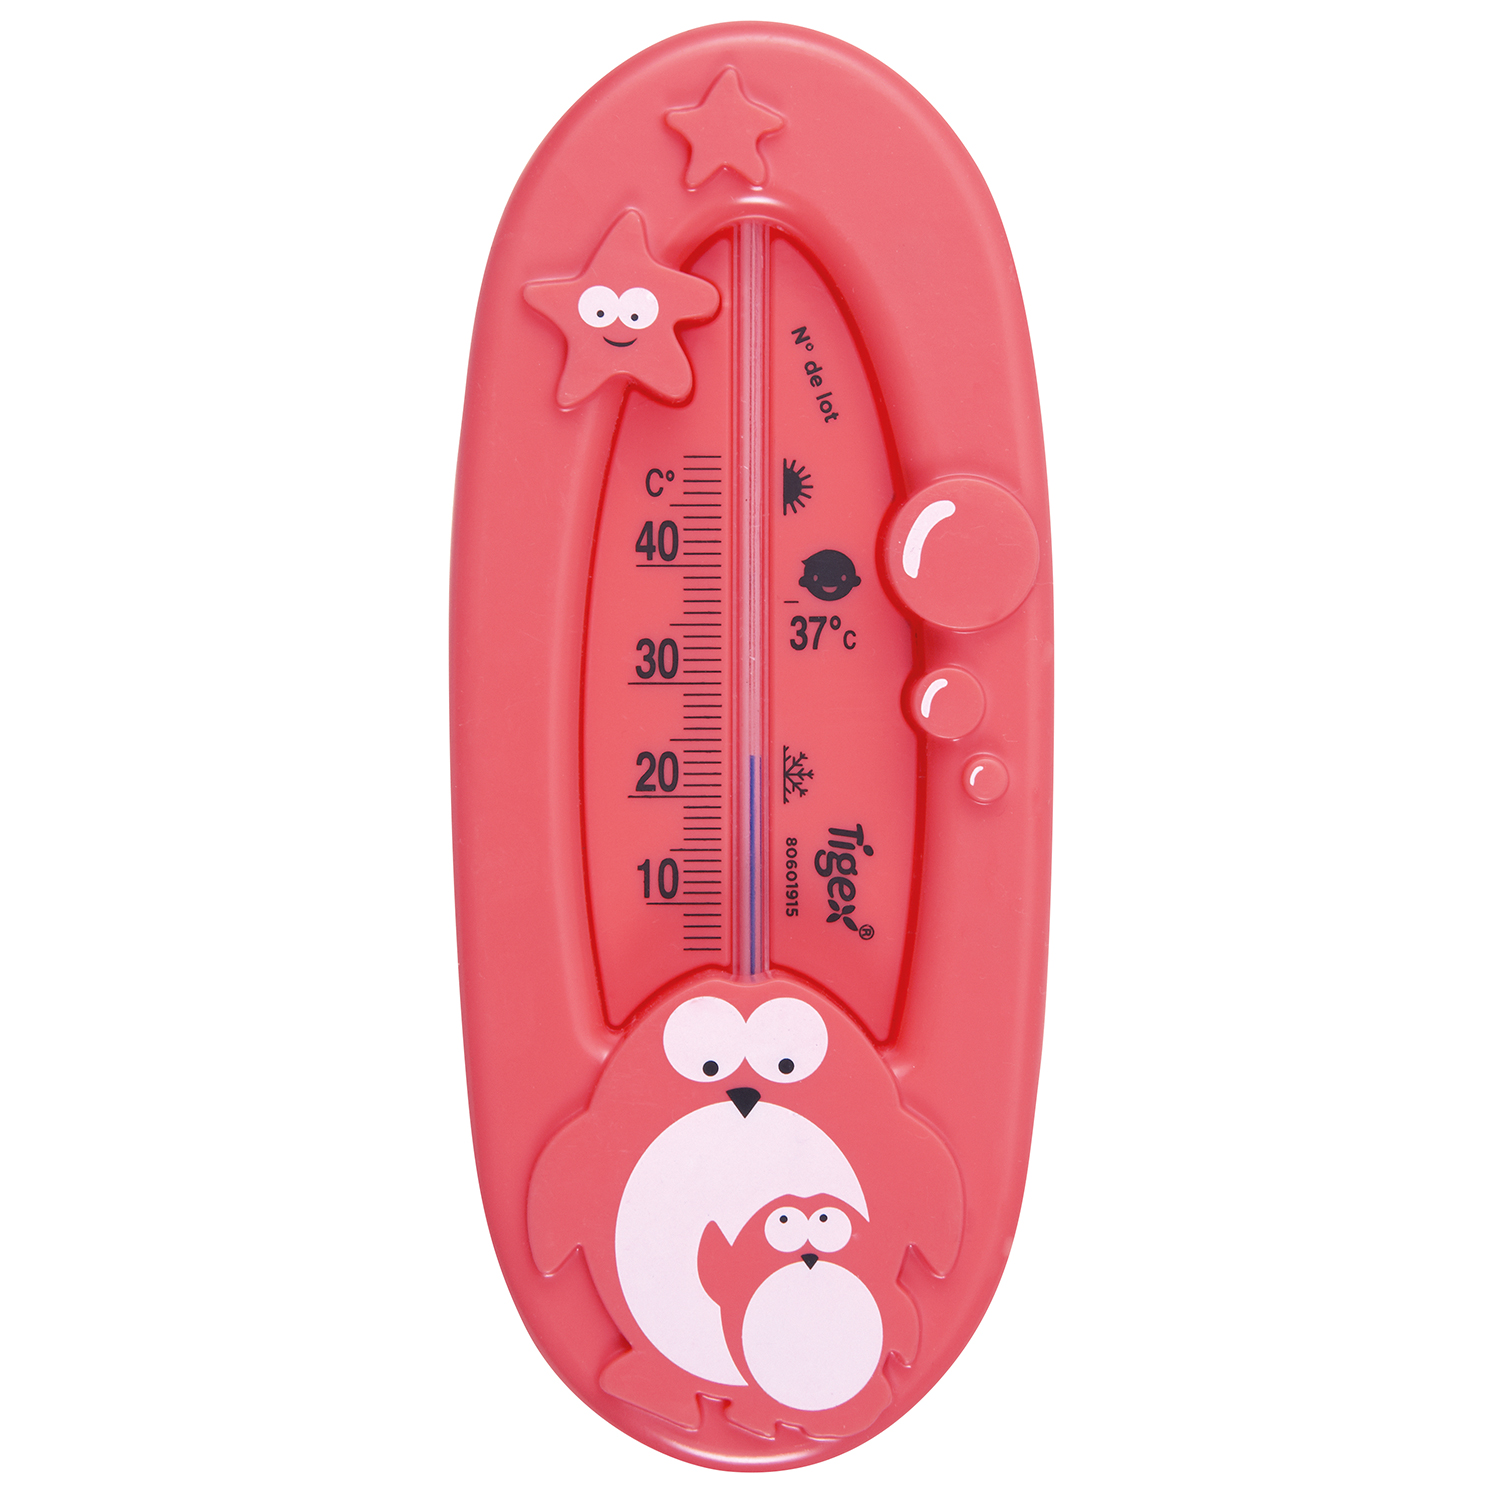 Tigex Thermomètre de bain, Thermomètre numérique Crabe